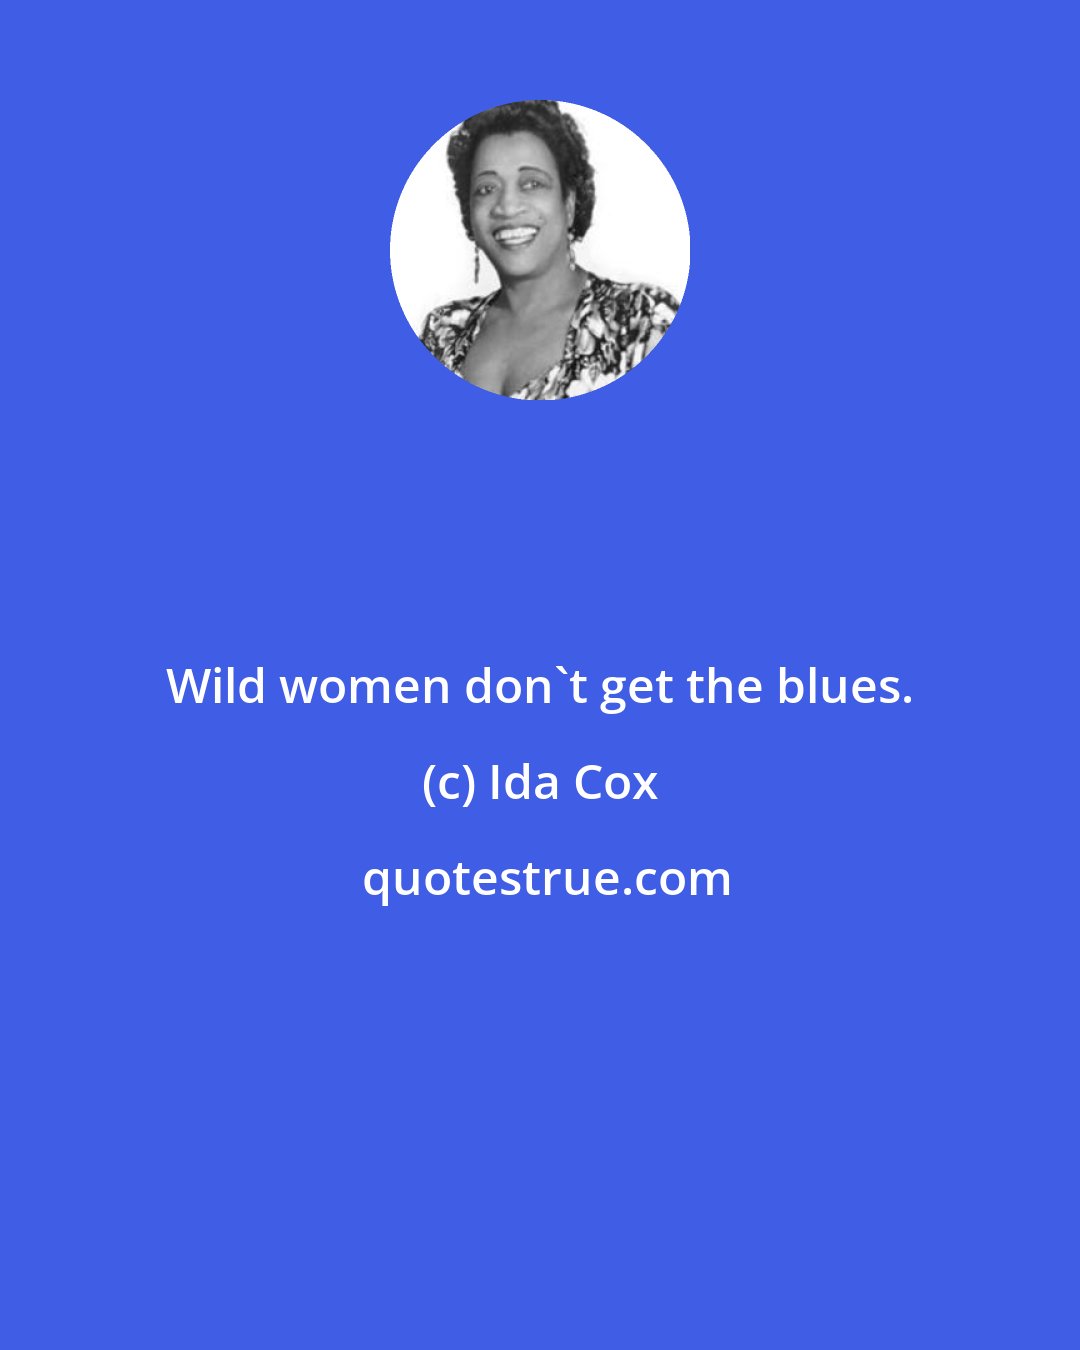 Ida Cox: Wild women don't get the blues.